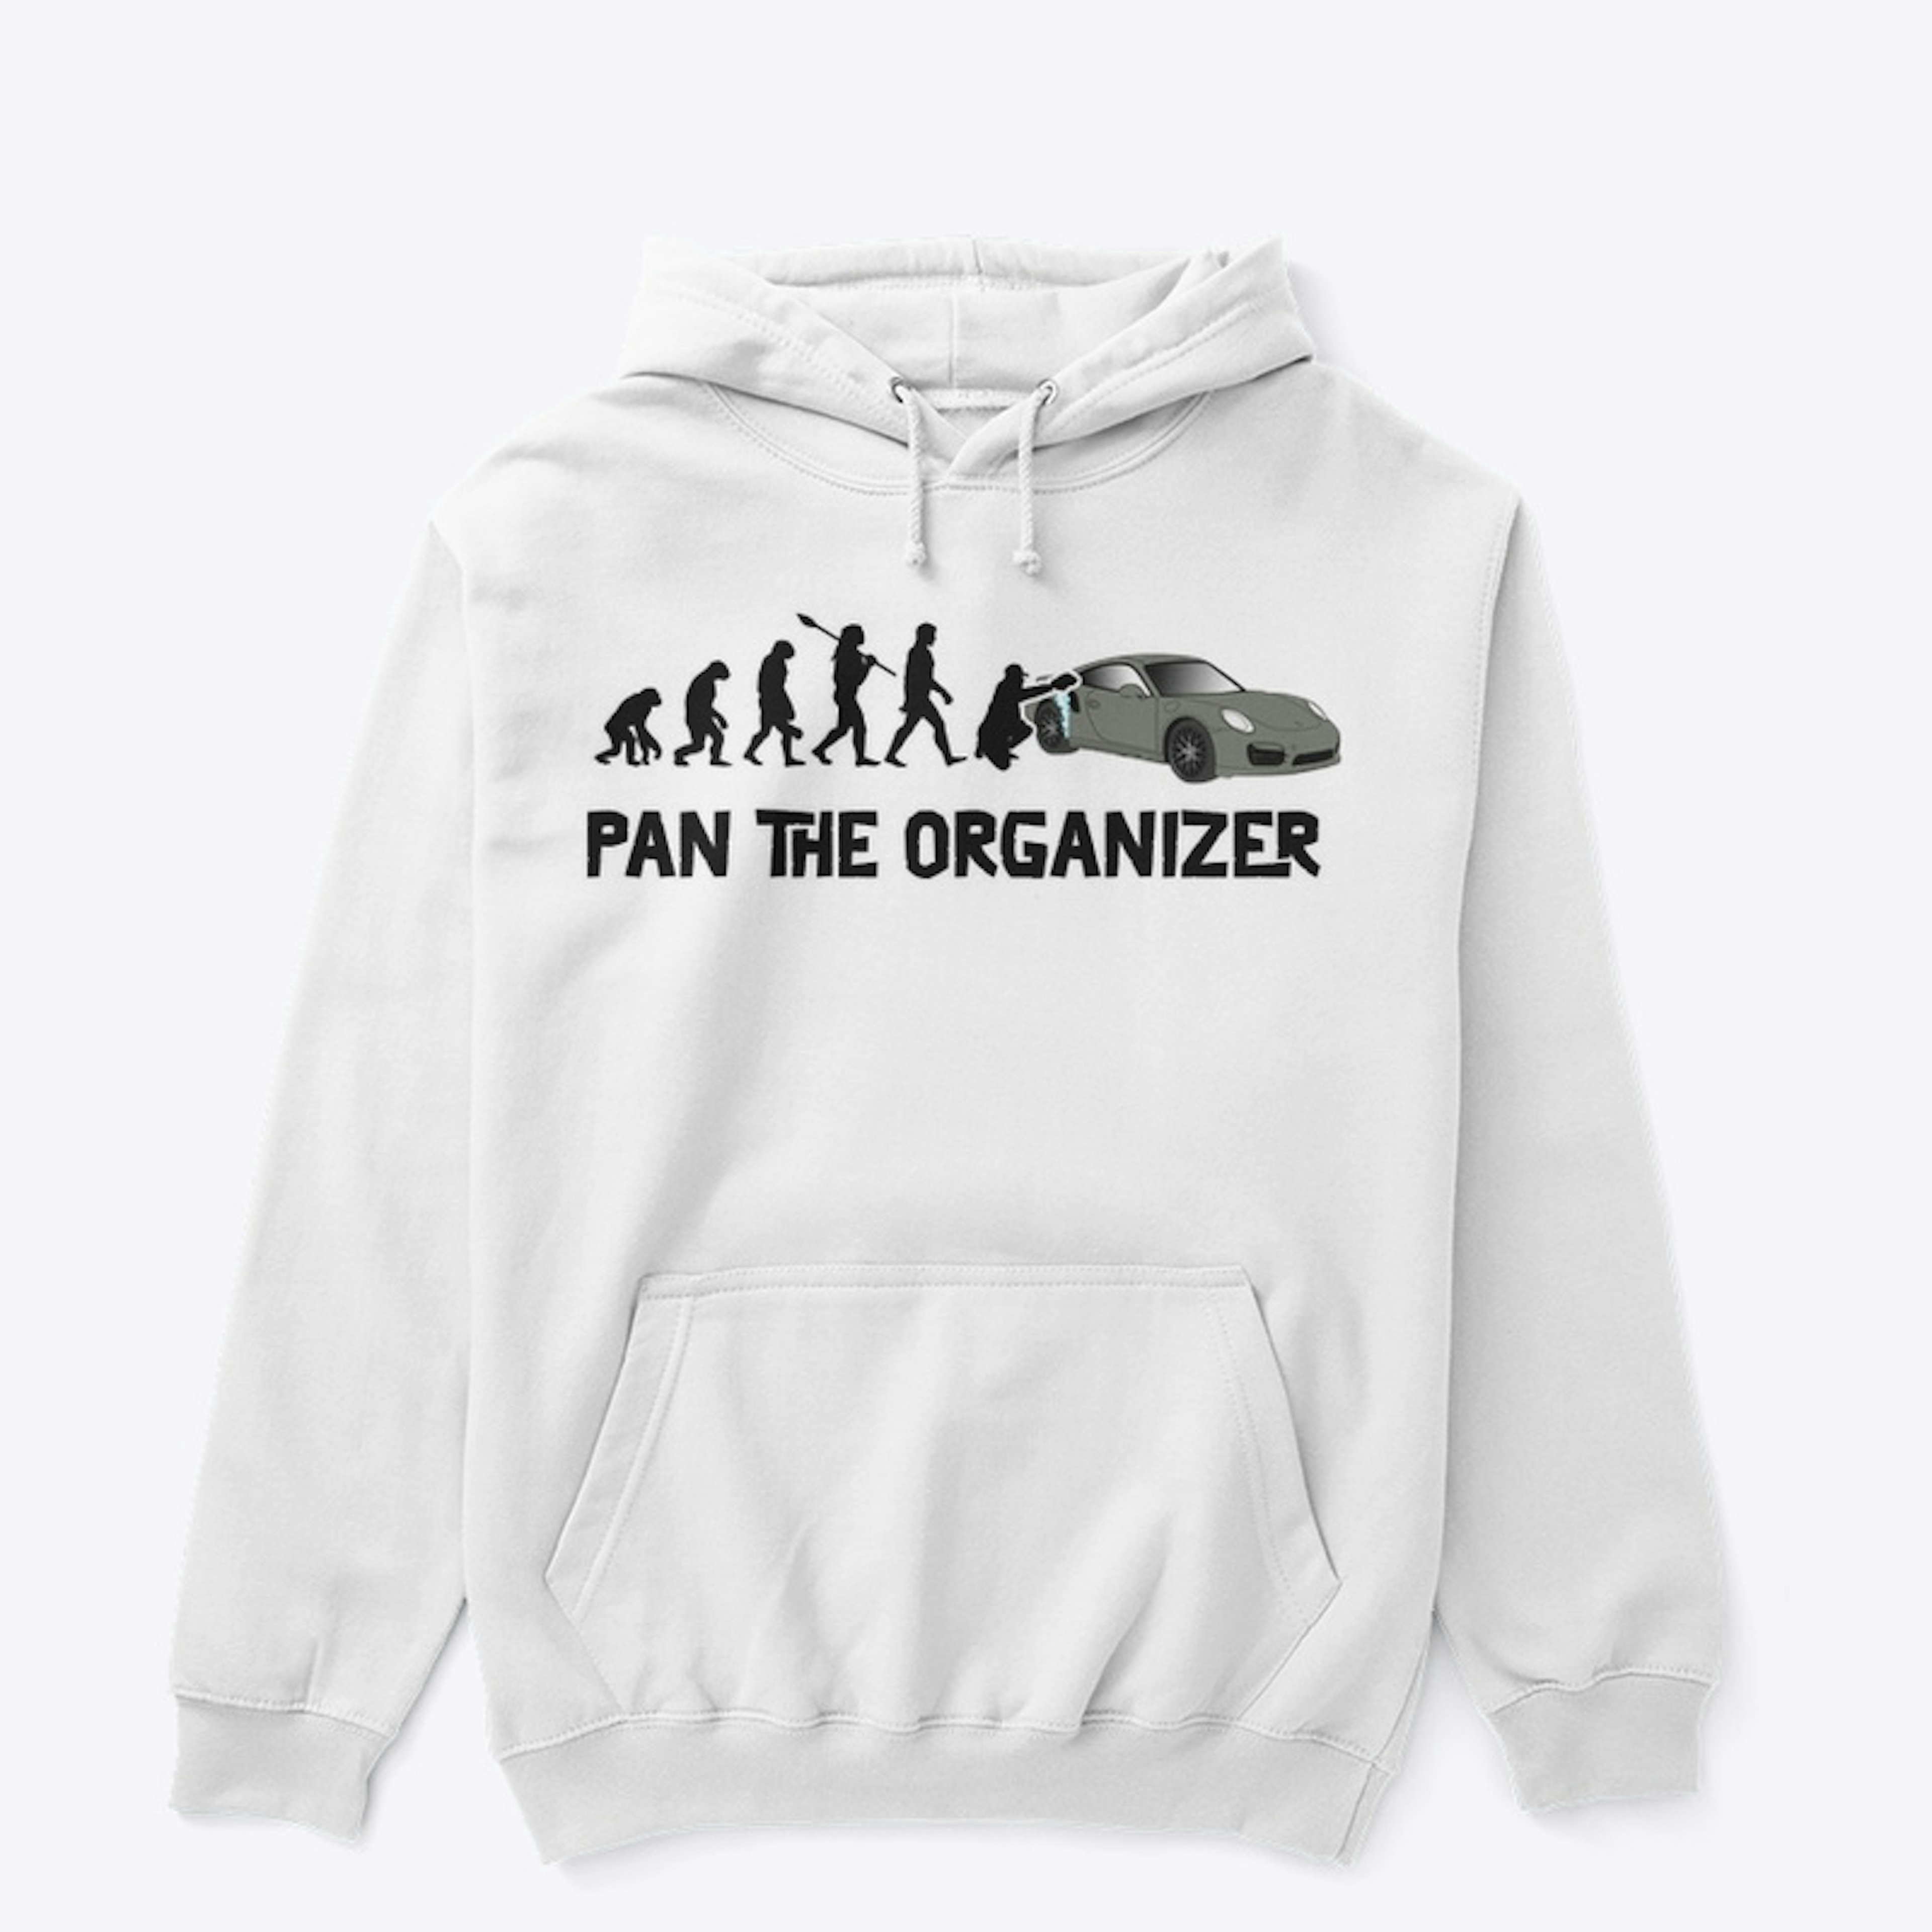 Pan The Organizer evolution of man!